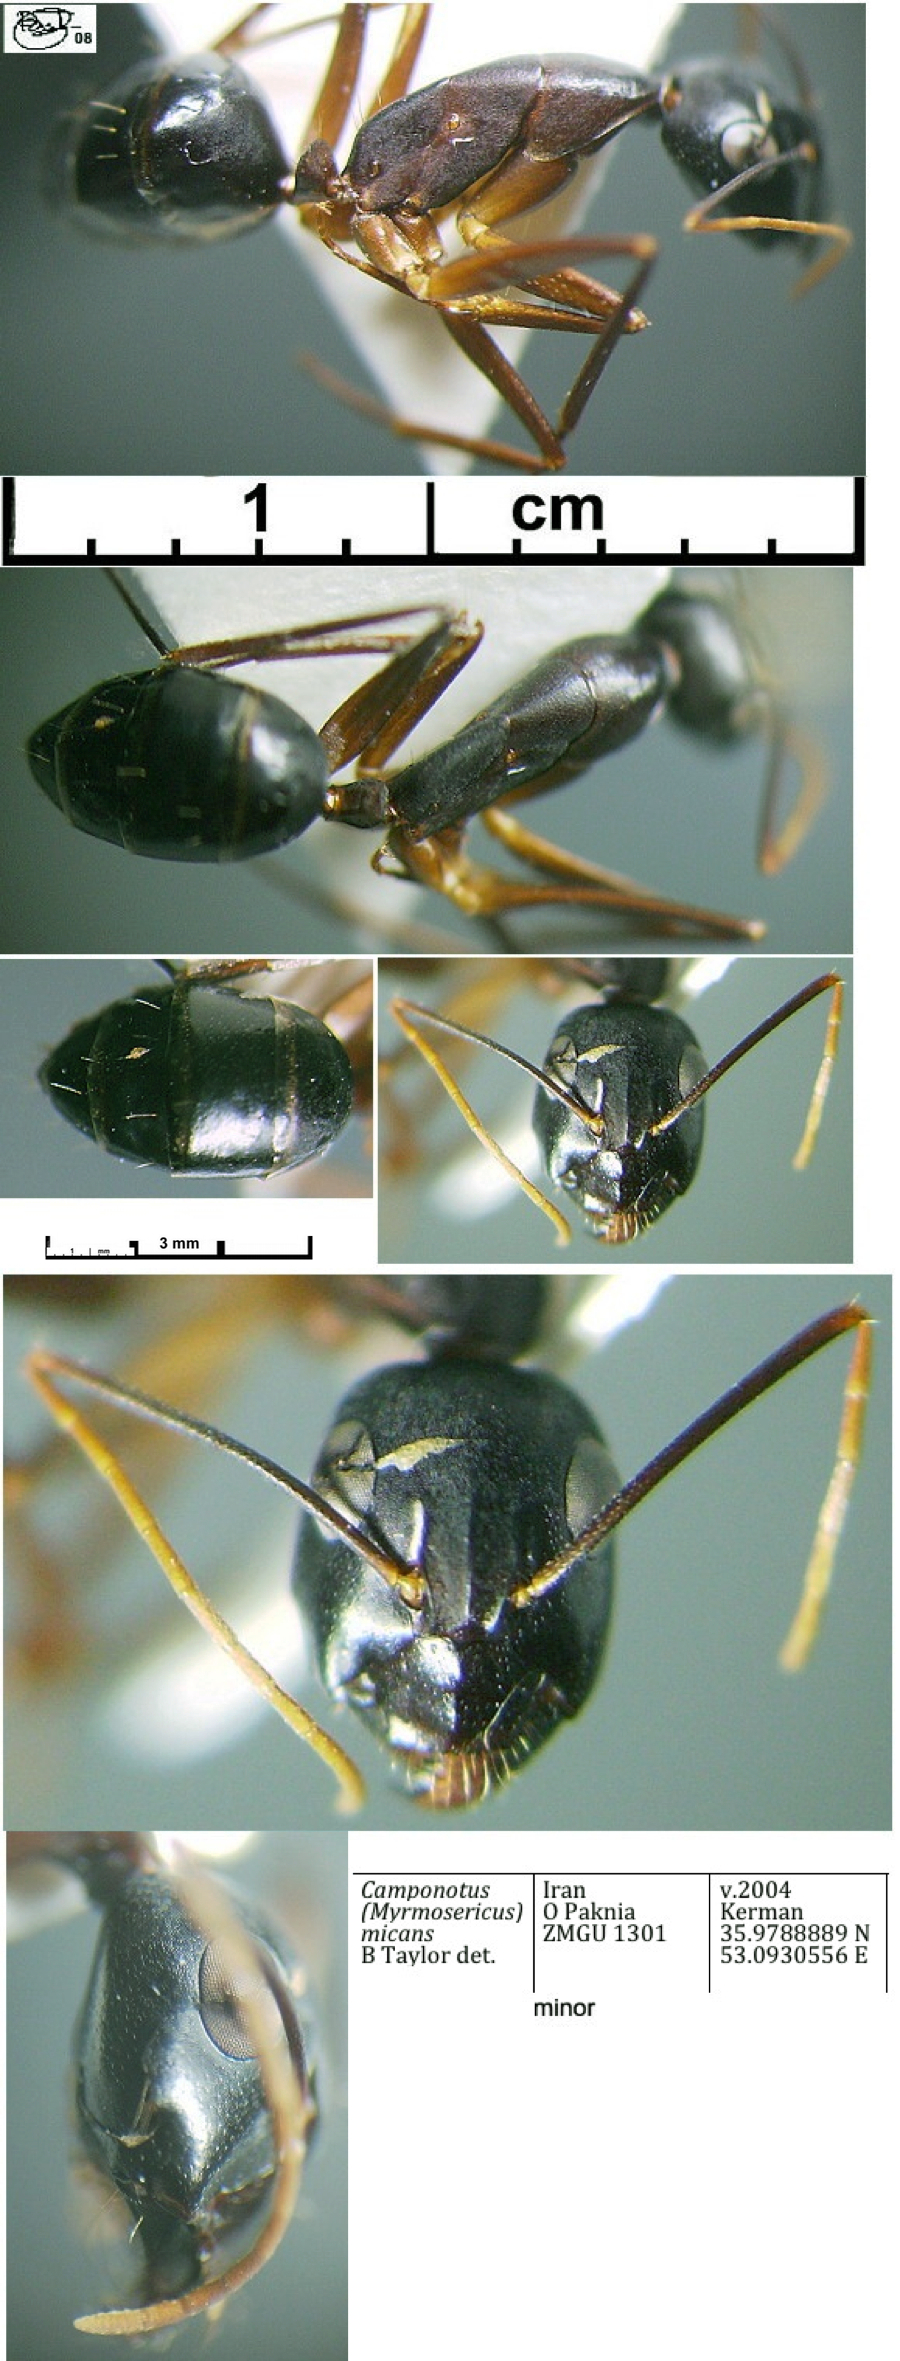 {Camponotus fellah Iran form minor}